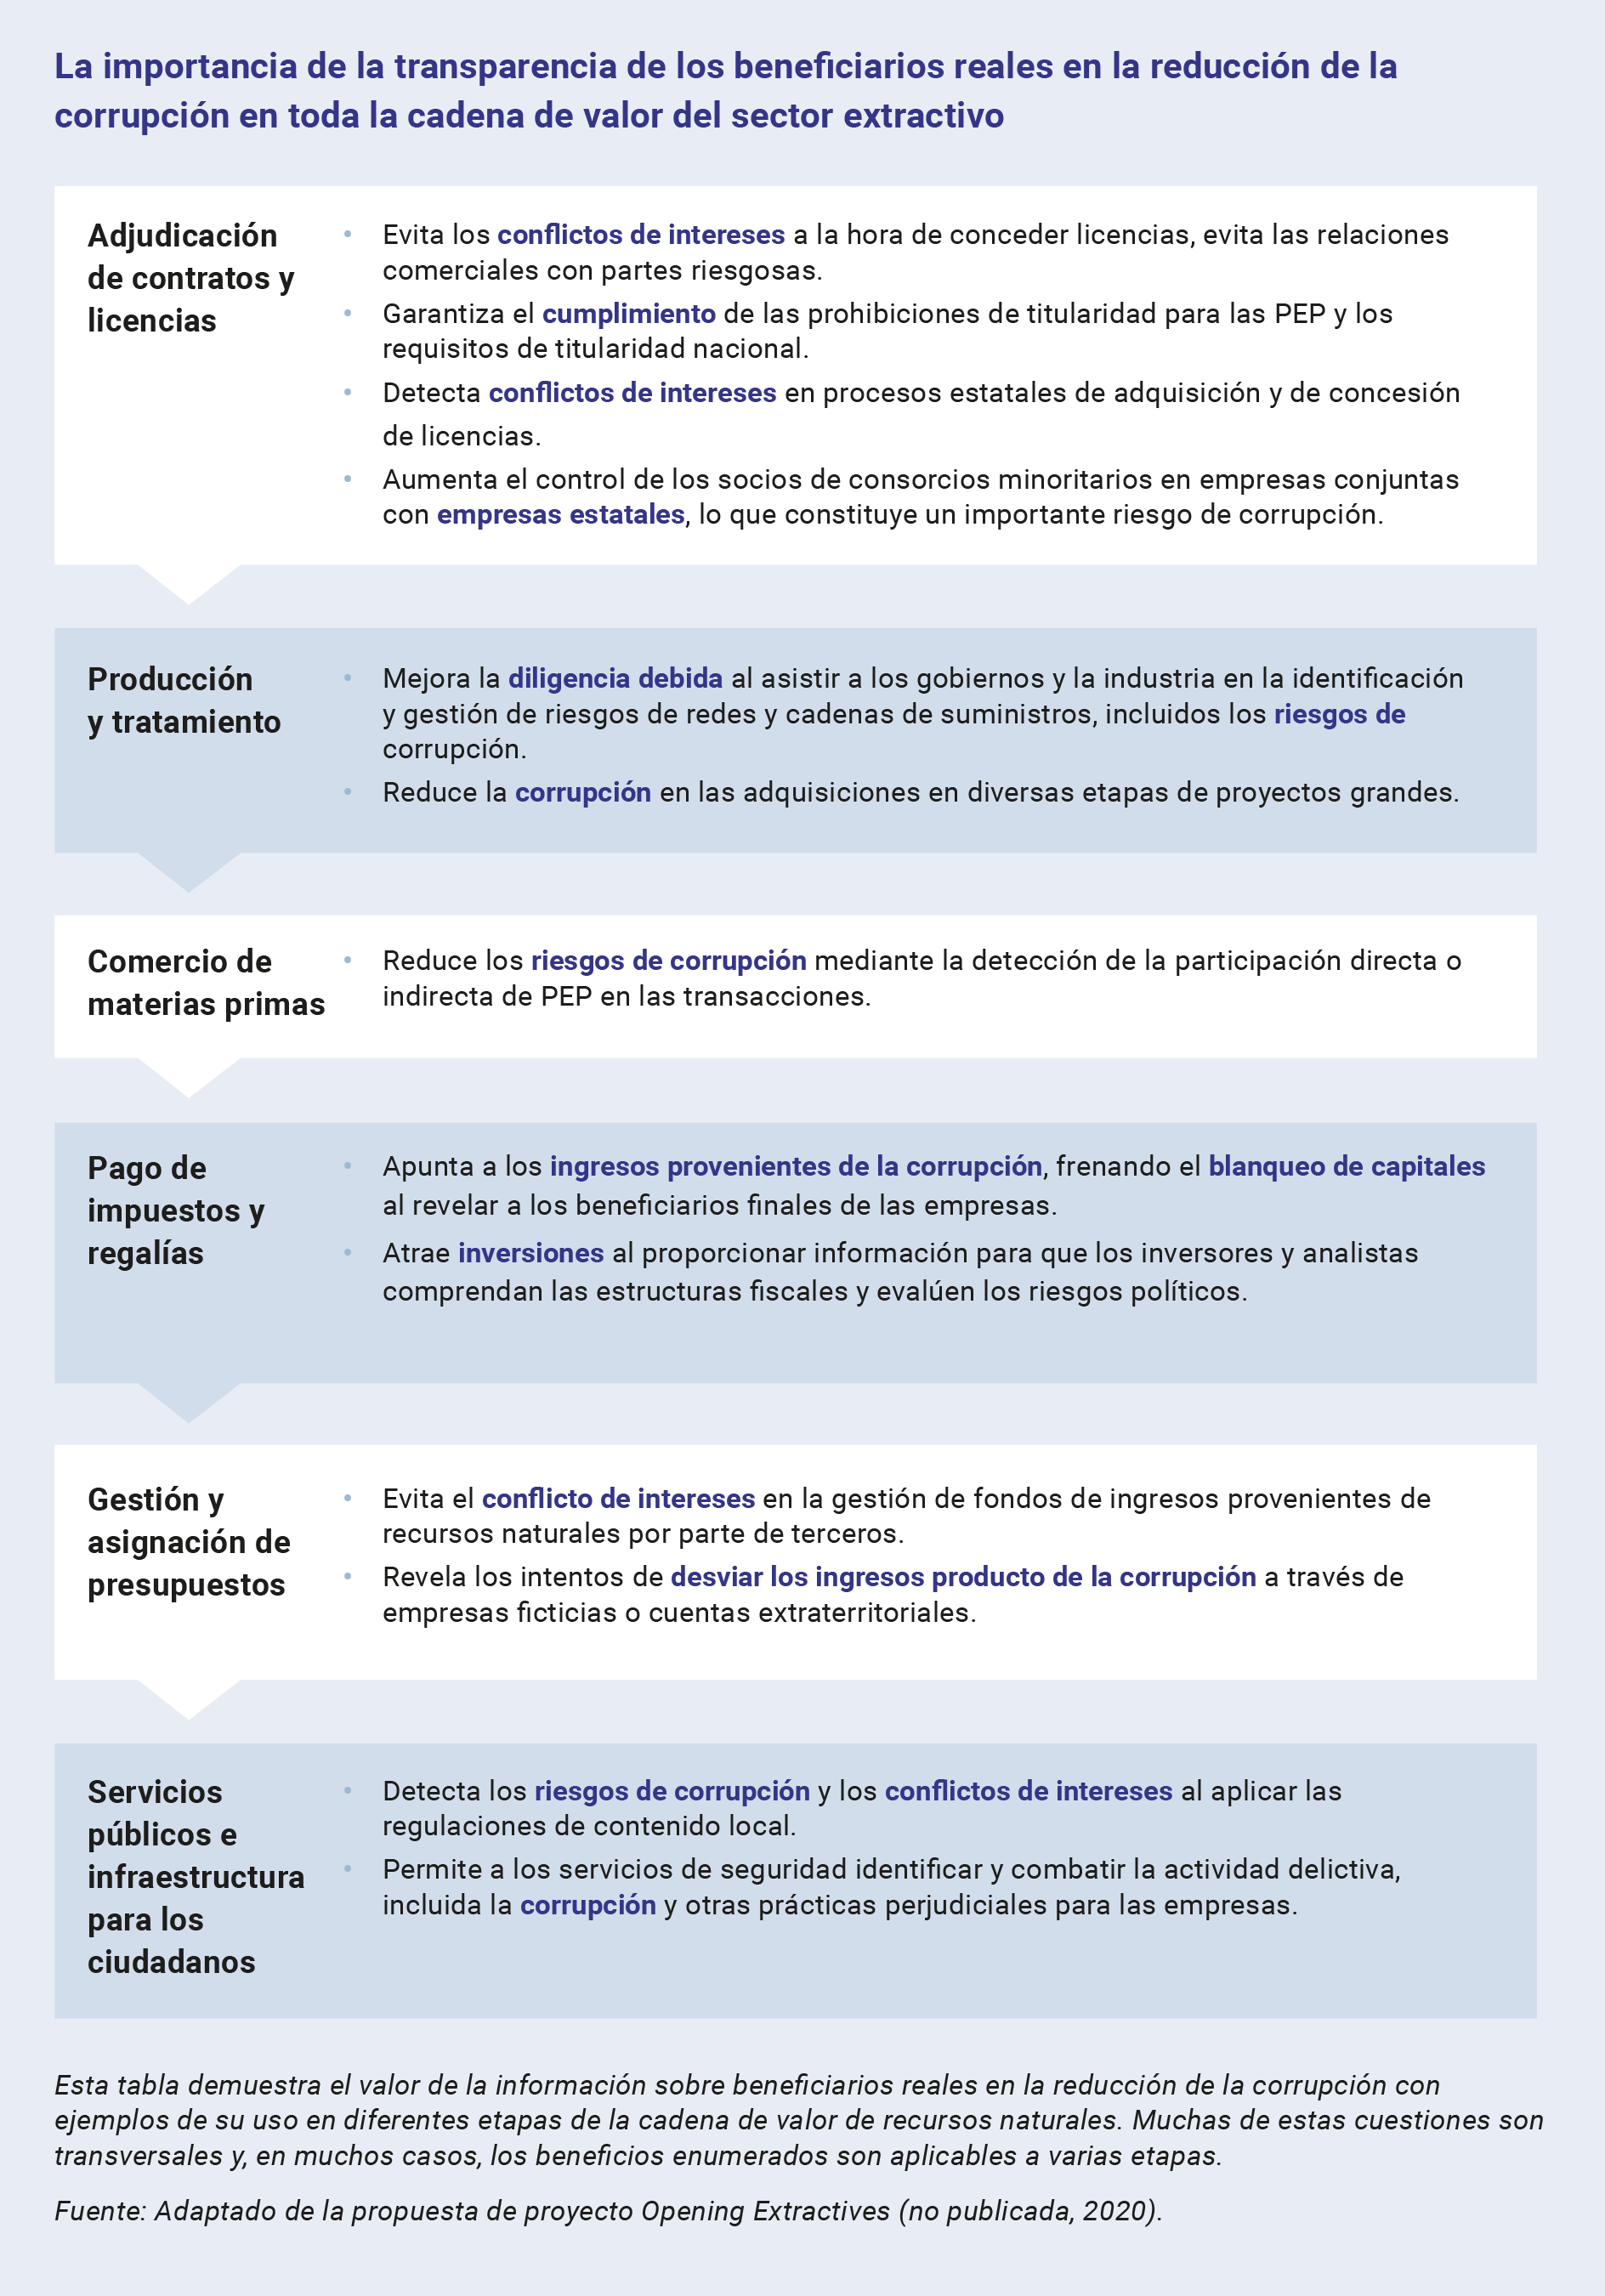 OE Corruption Policy Brief p29 table SPANISH